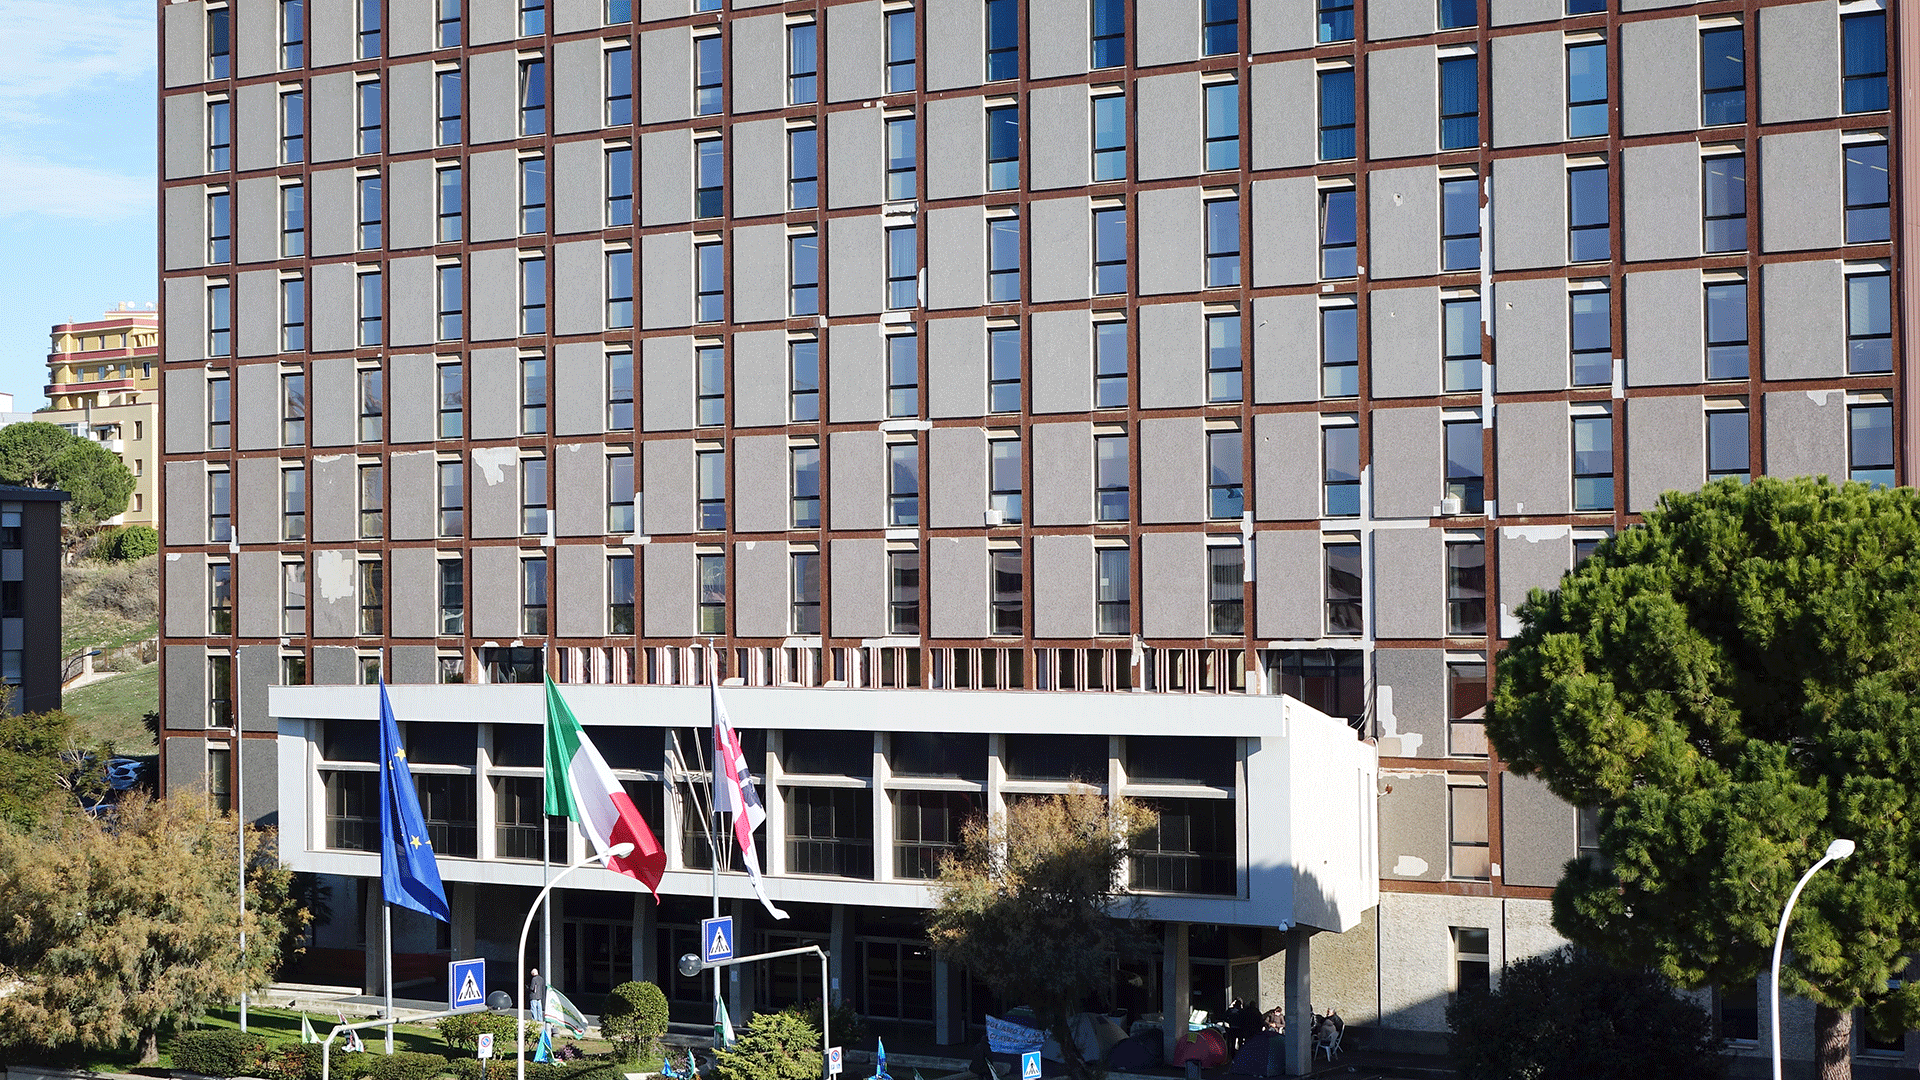 Palazzo Regione Sarda